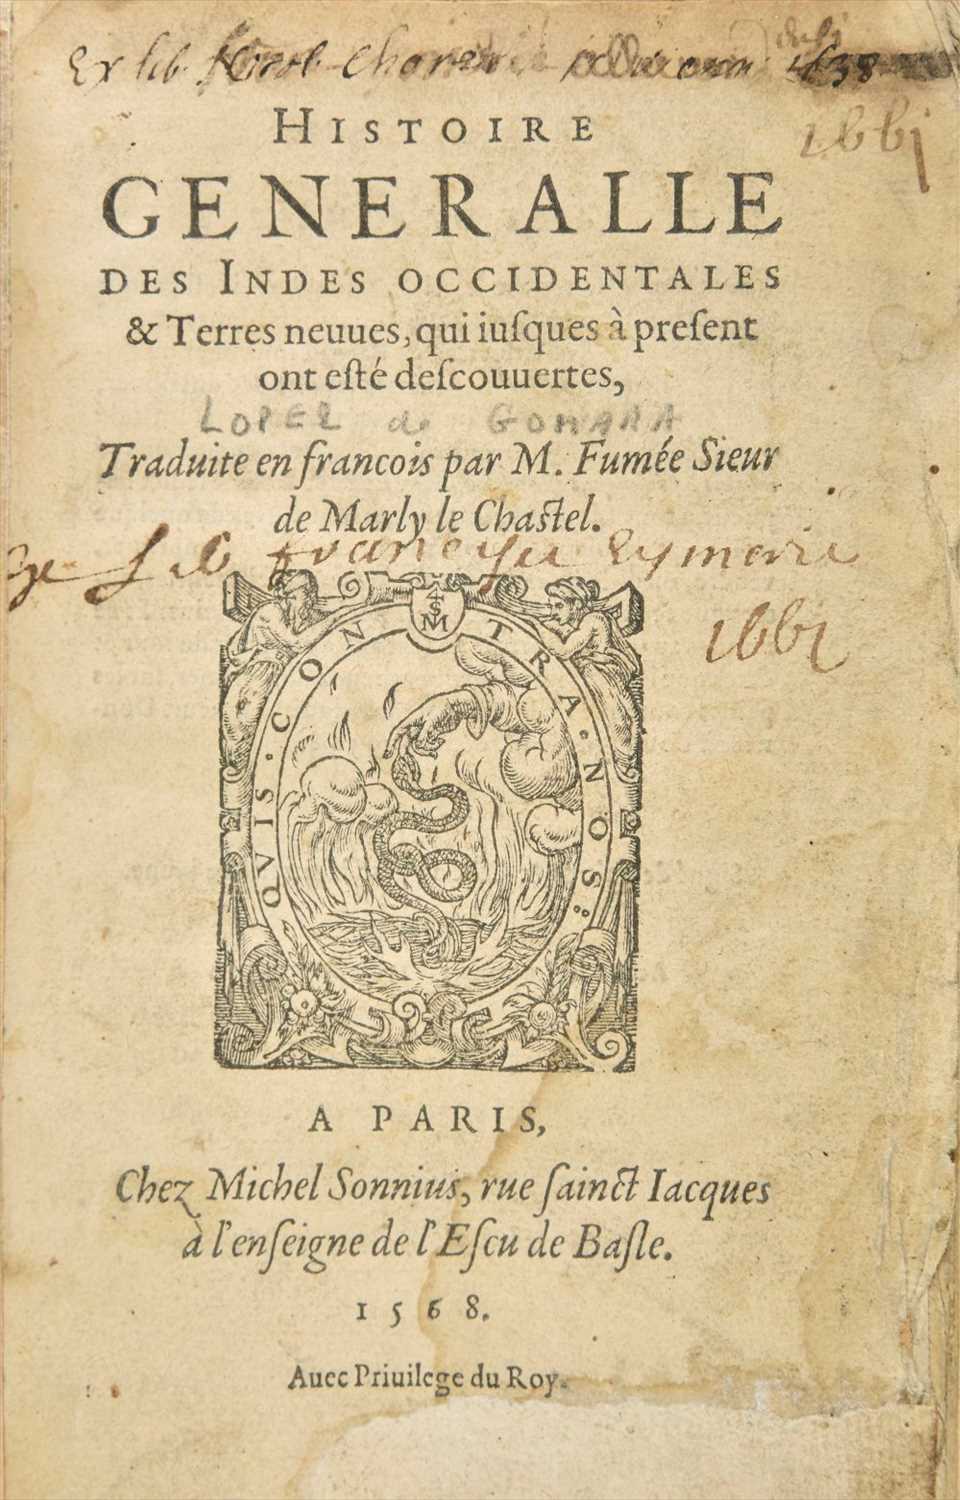 Lot 23 - Lopez de Gomara (Francisco). Histoire generalle des Indes occidentales, 1568